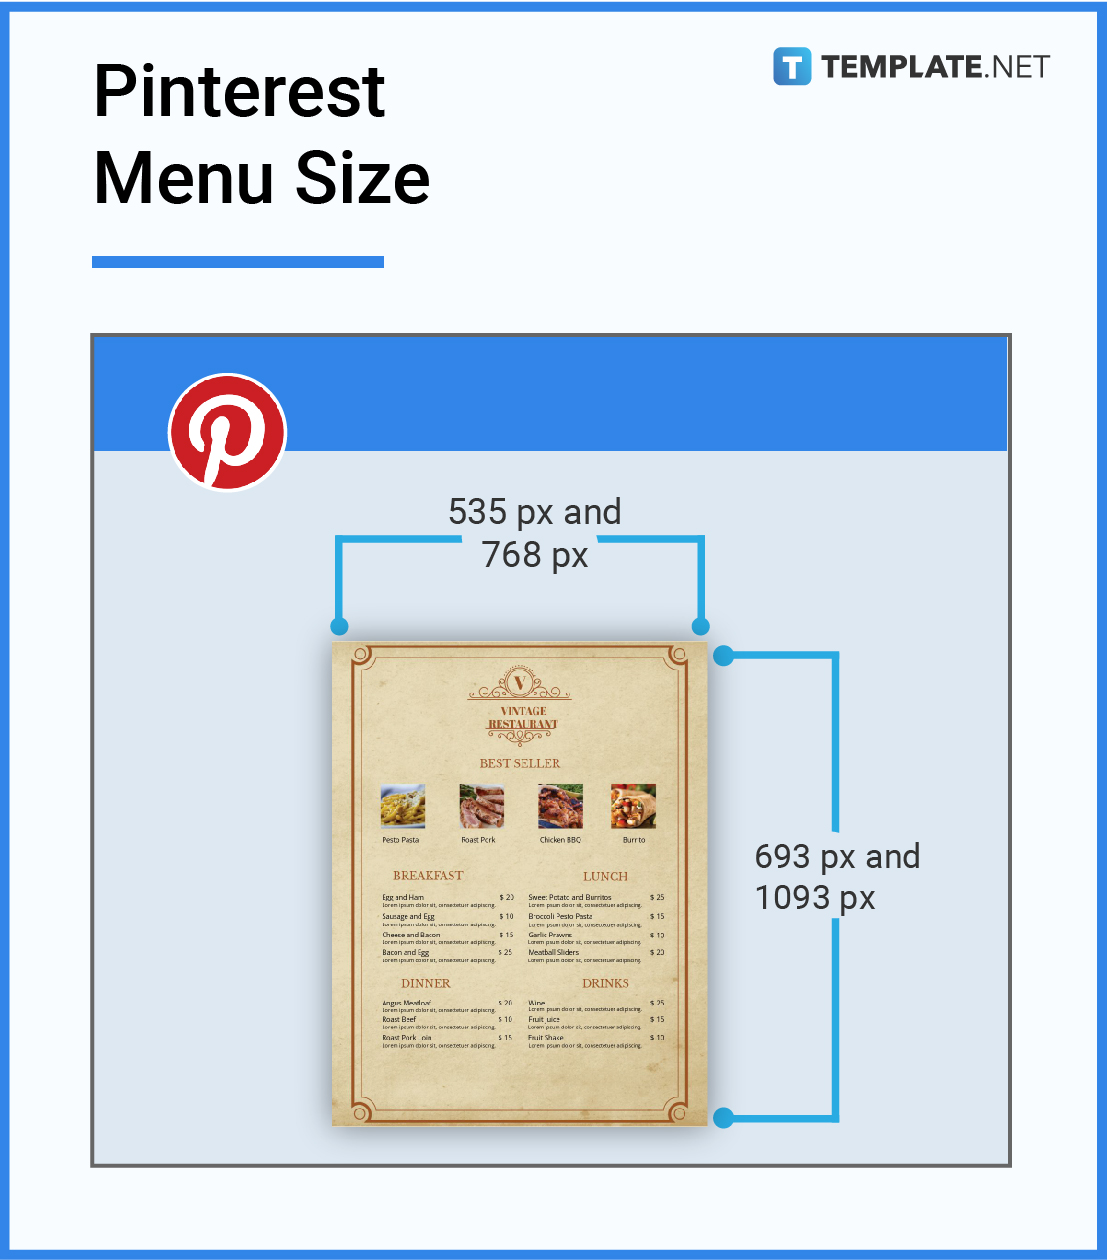 pinterest menu size